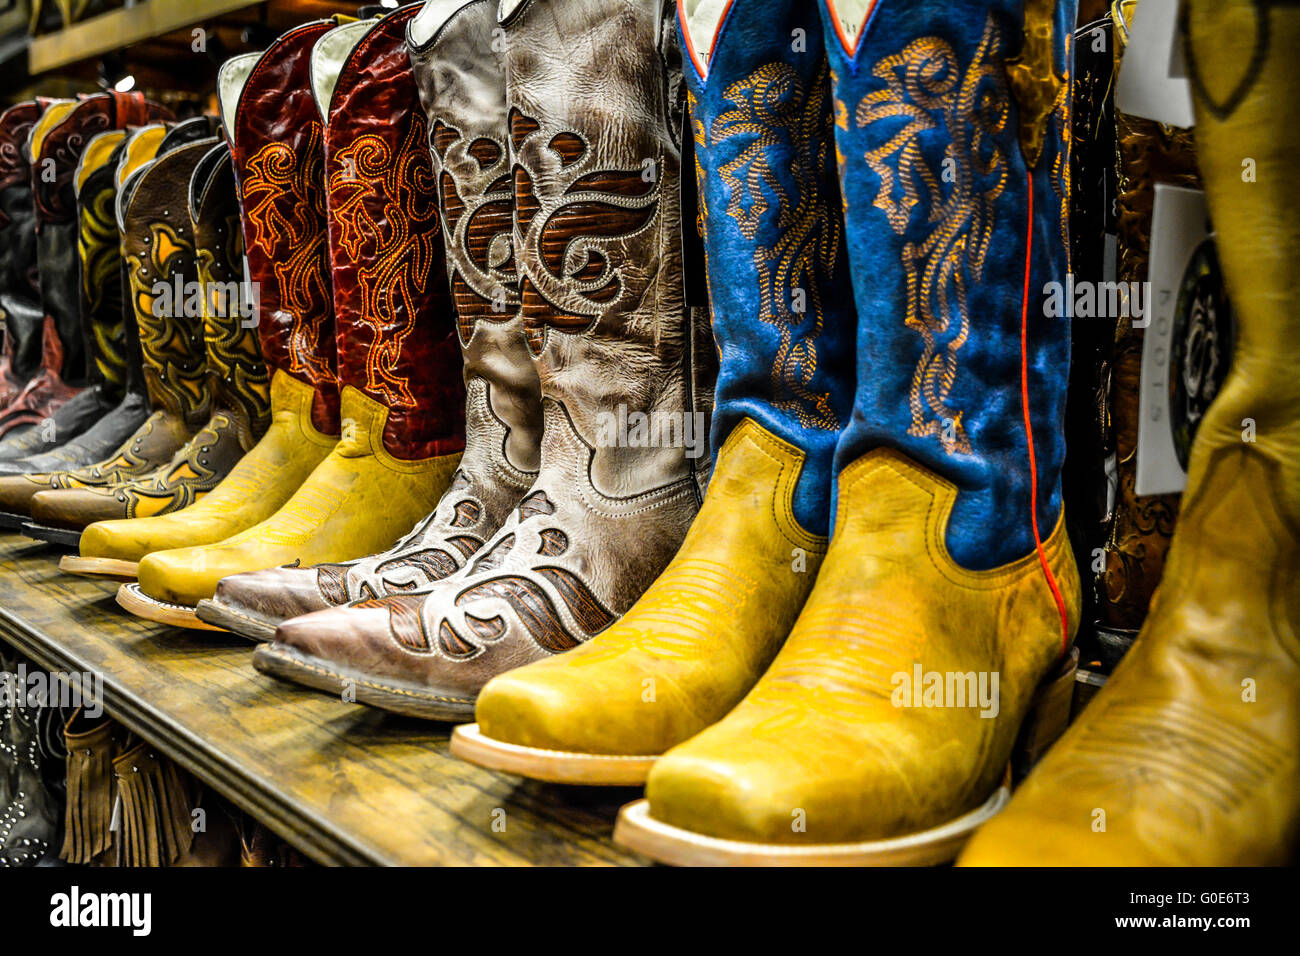 The Nashville Cowboy boot store has rows of unique Cowboy boots for ...